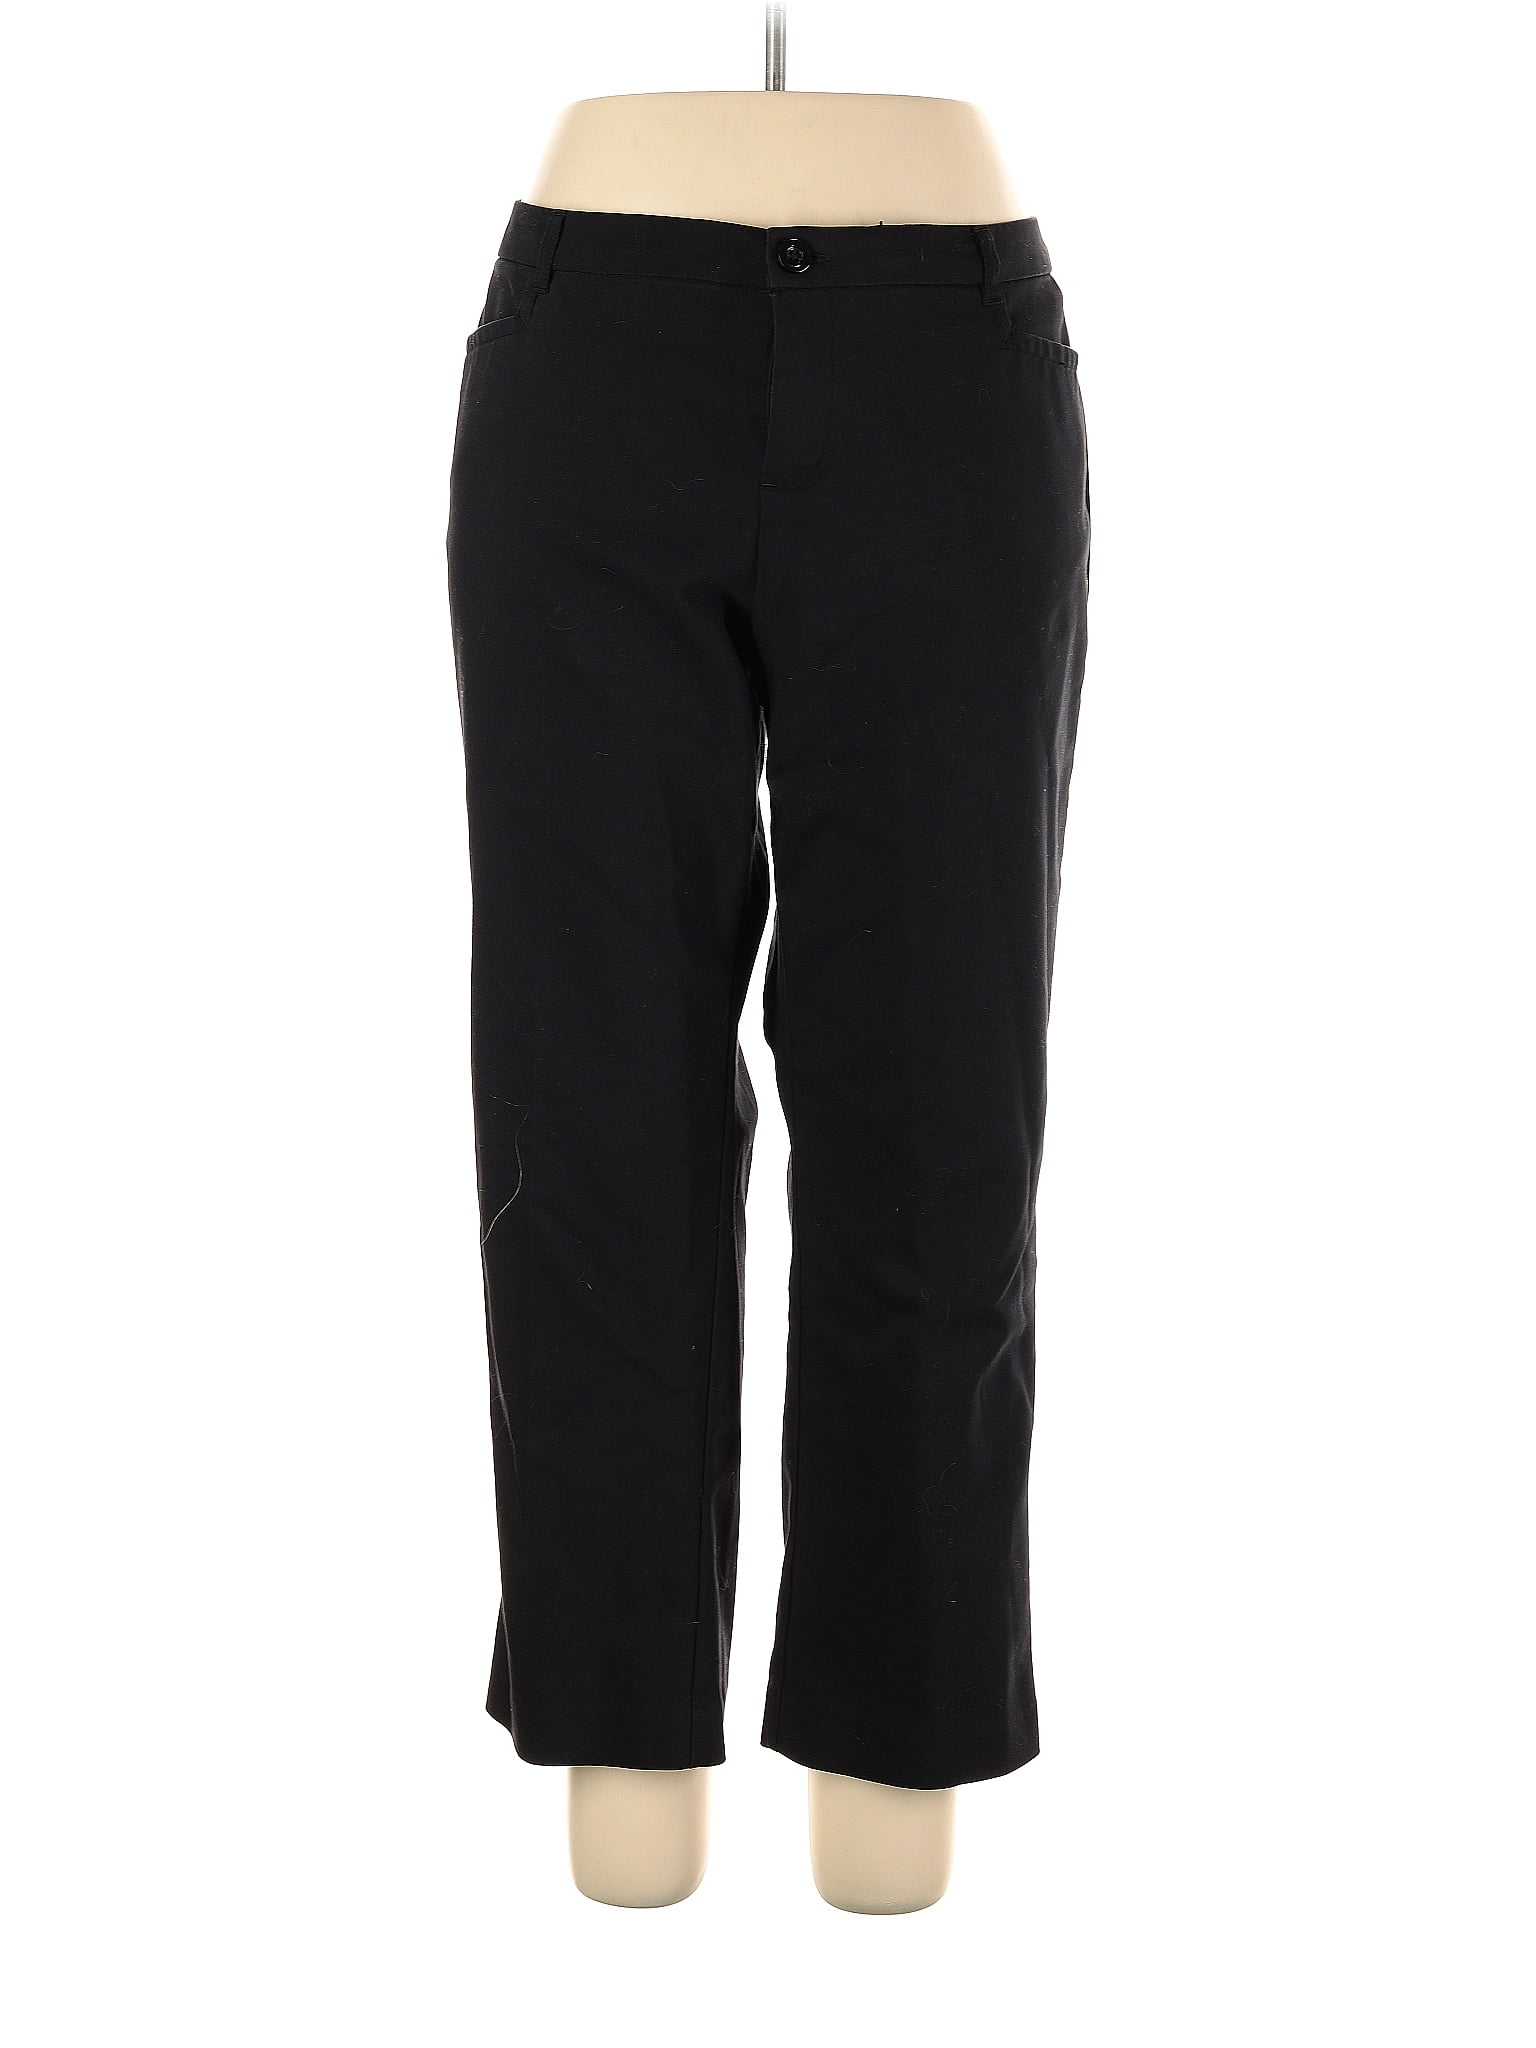 Briggs Polka Dots Black Casual Pants Size 16 - 70% off